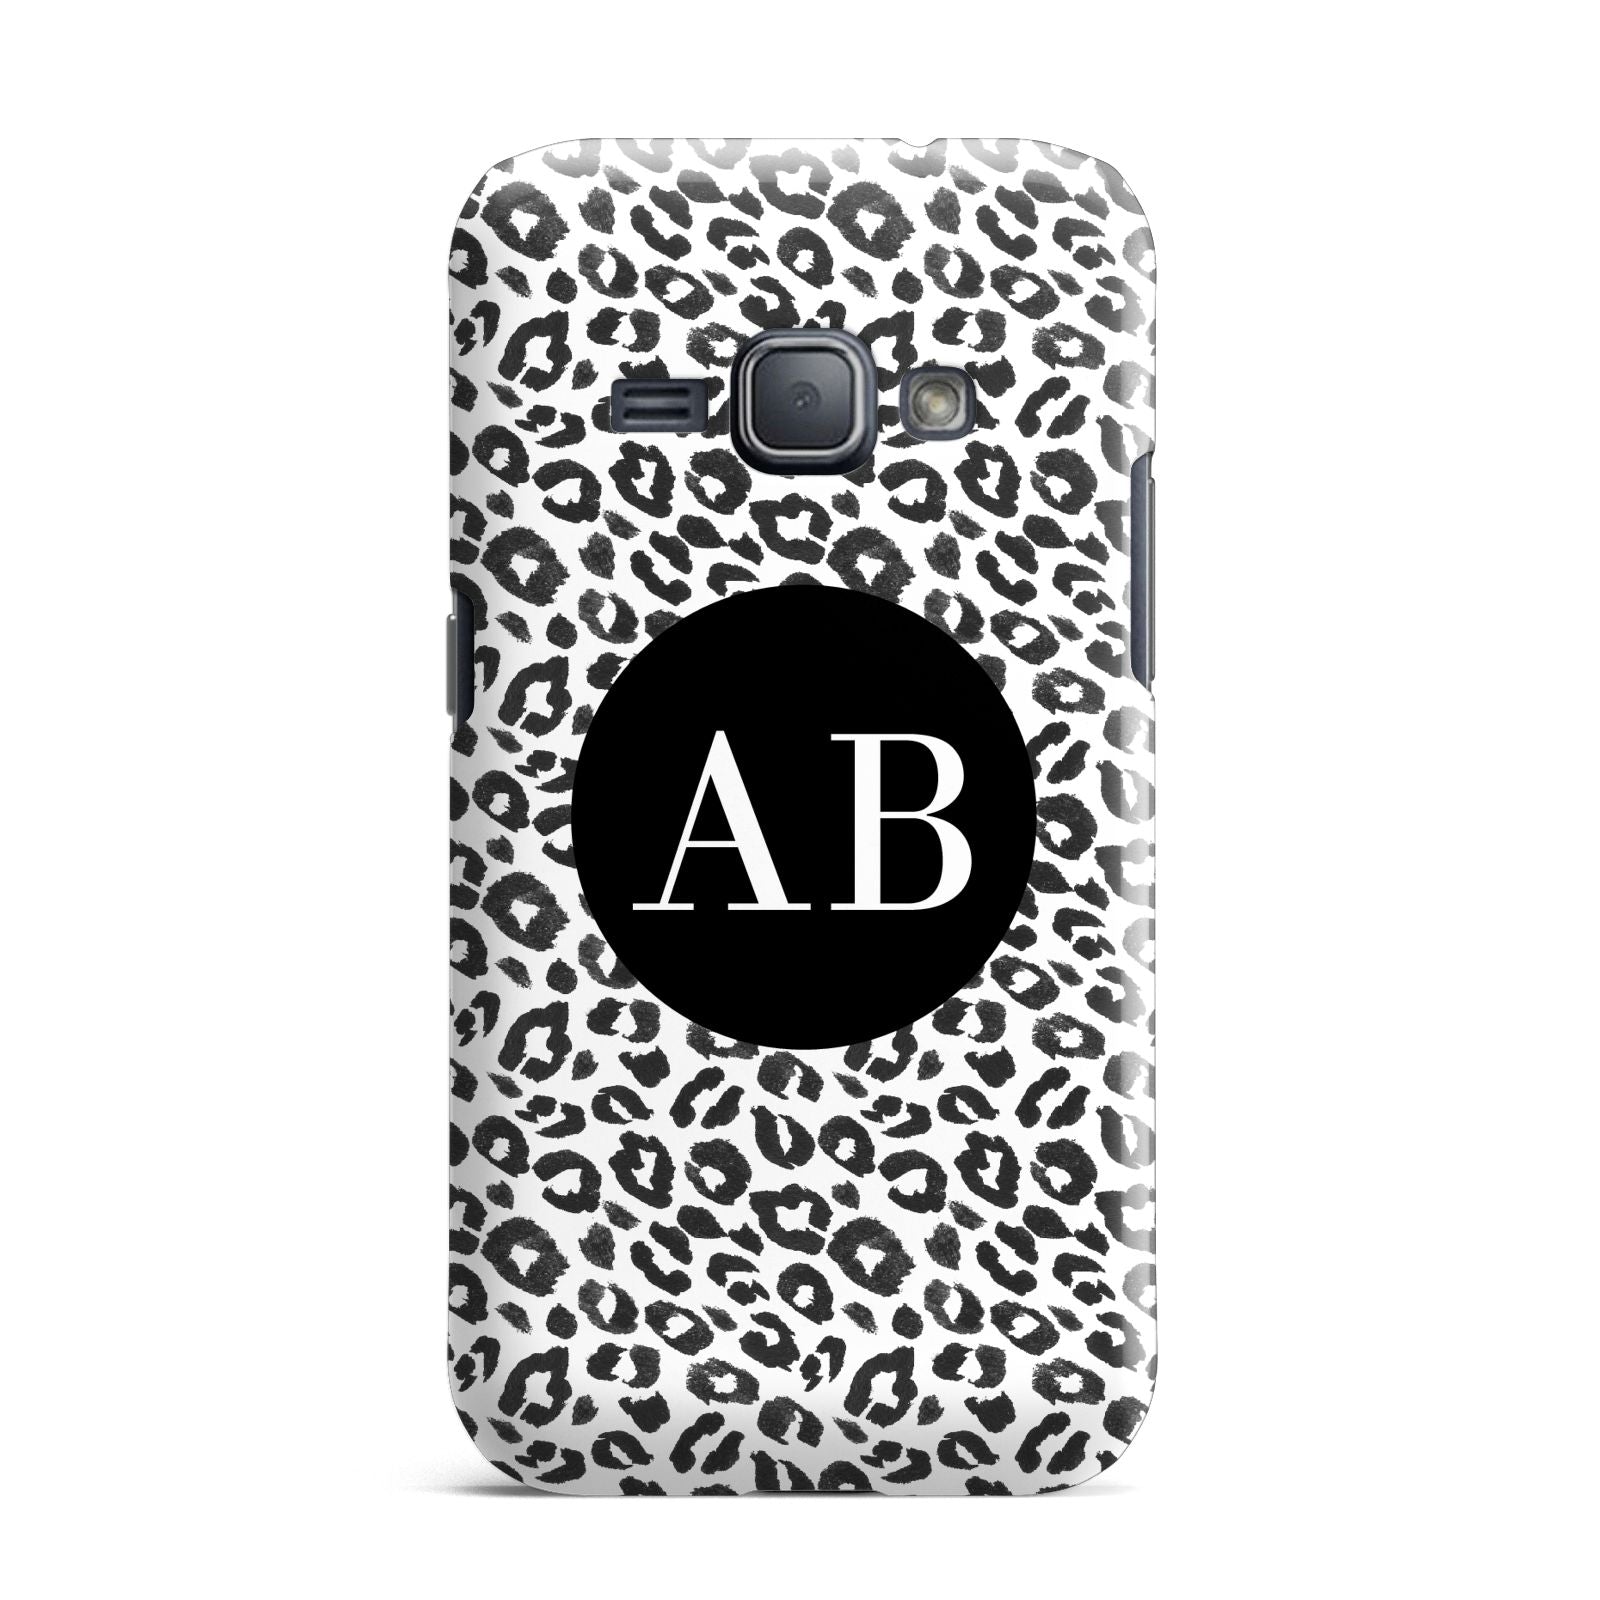 Leopard Print Black and White Samsung Galaxy J1 2016 Case